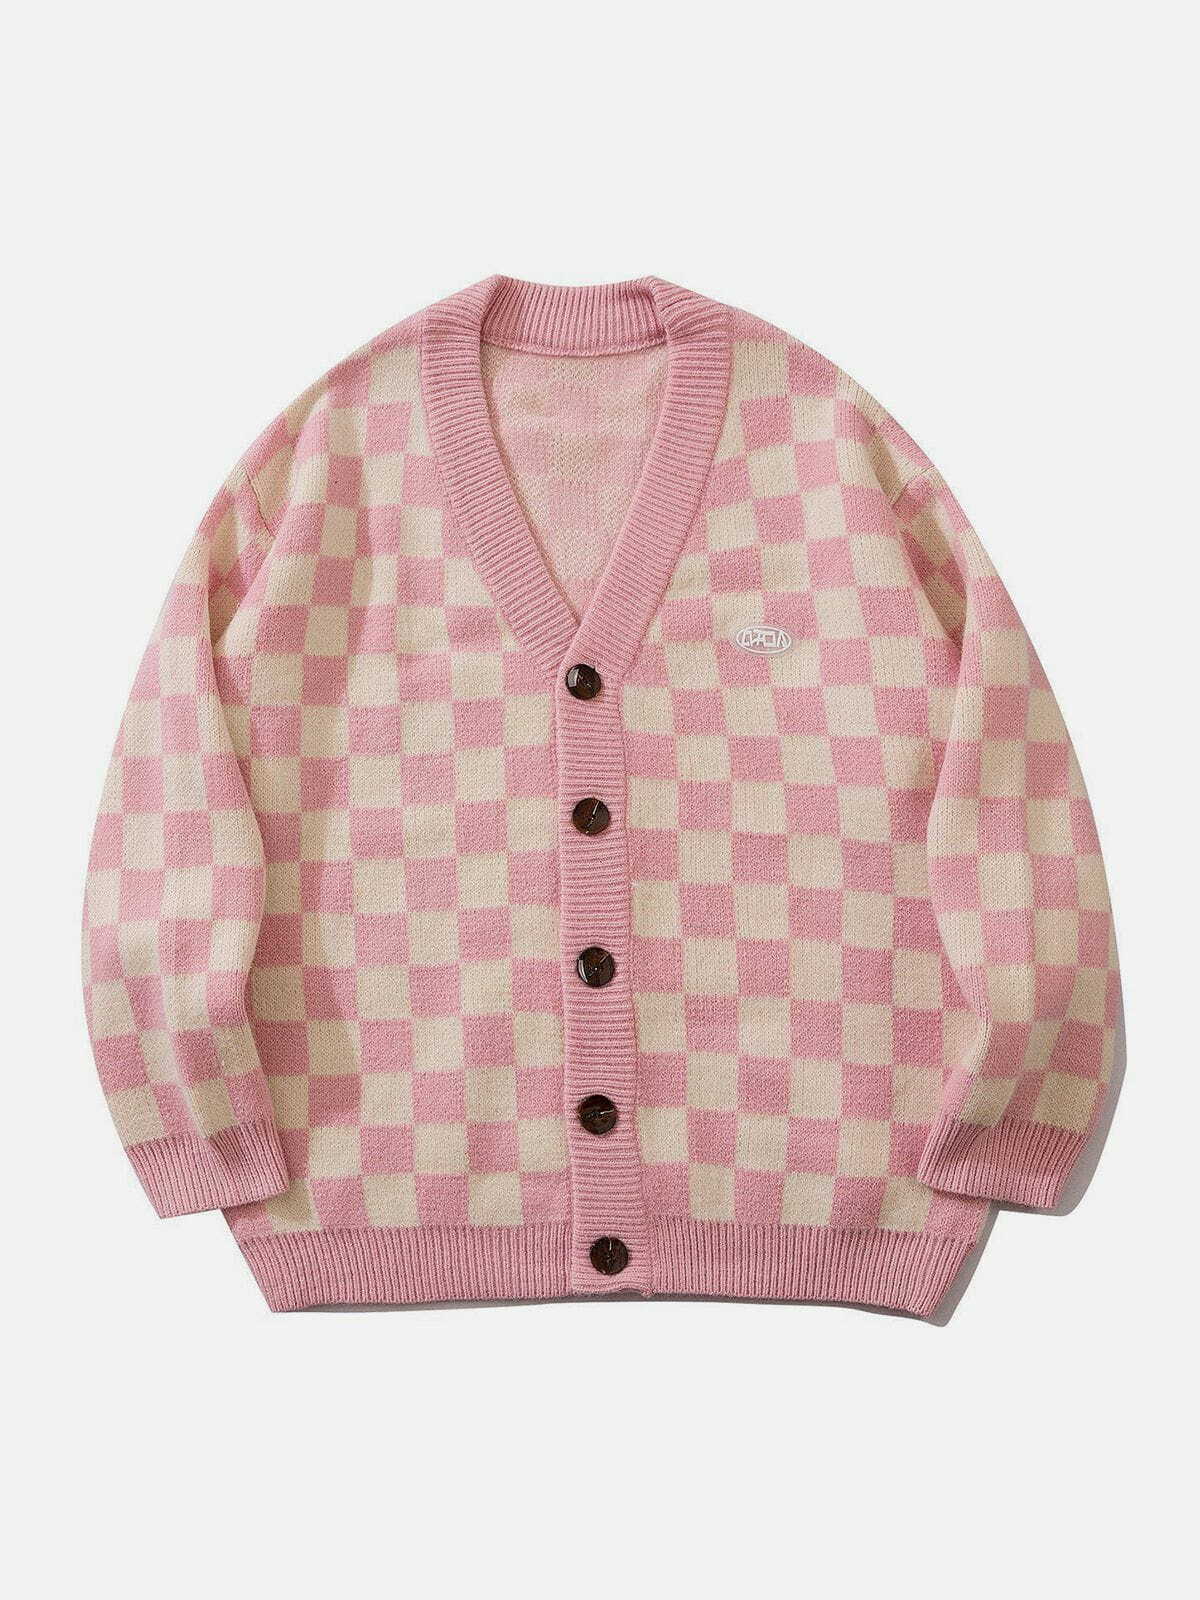 checkerboard knit cardigan retro urban chic 2961